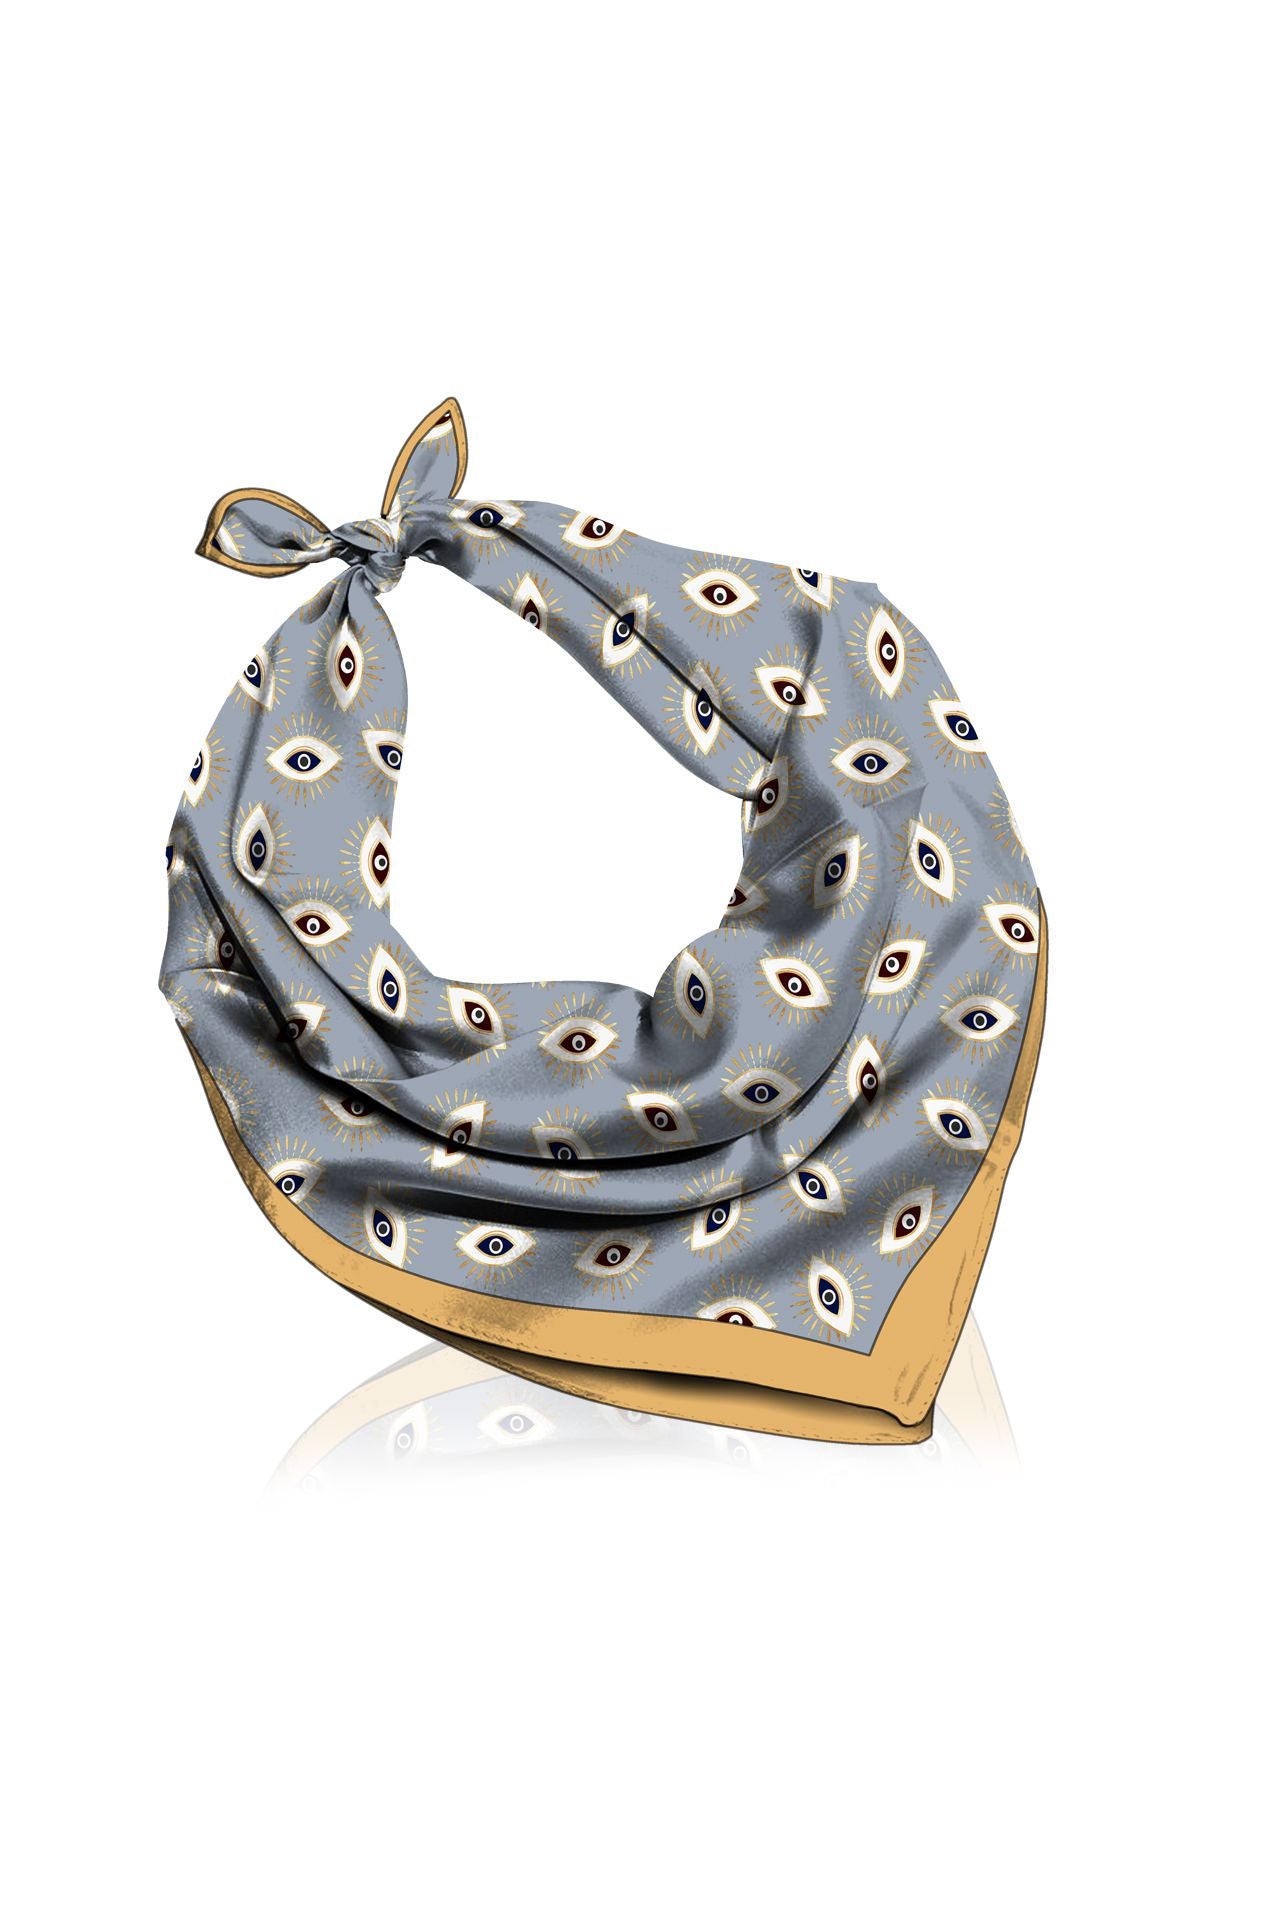 "Kyle X Shahida" "grey scarf for women" "designer scarves for women" "best luxury silk scarves"